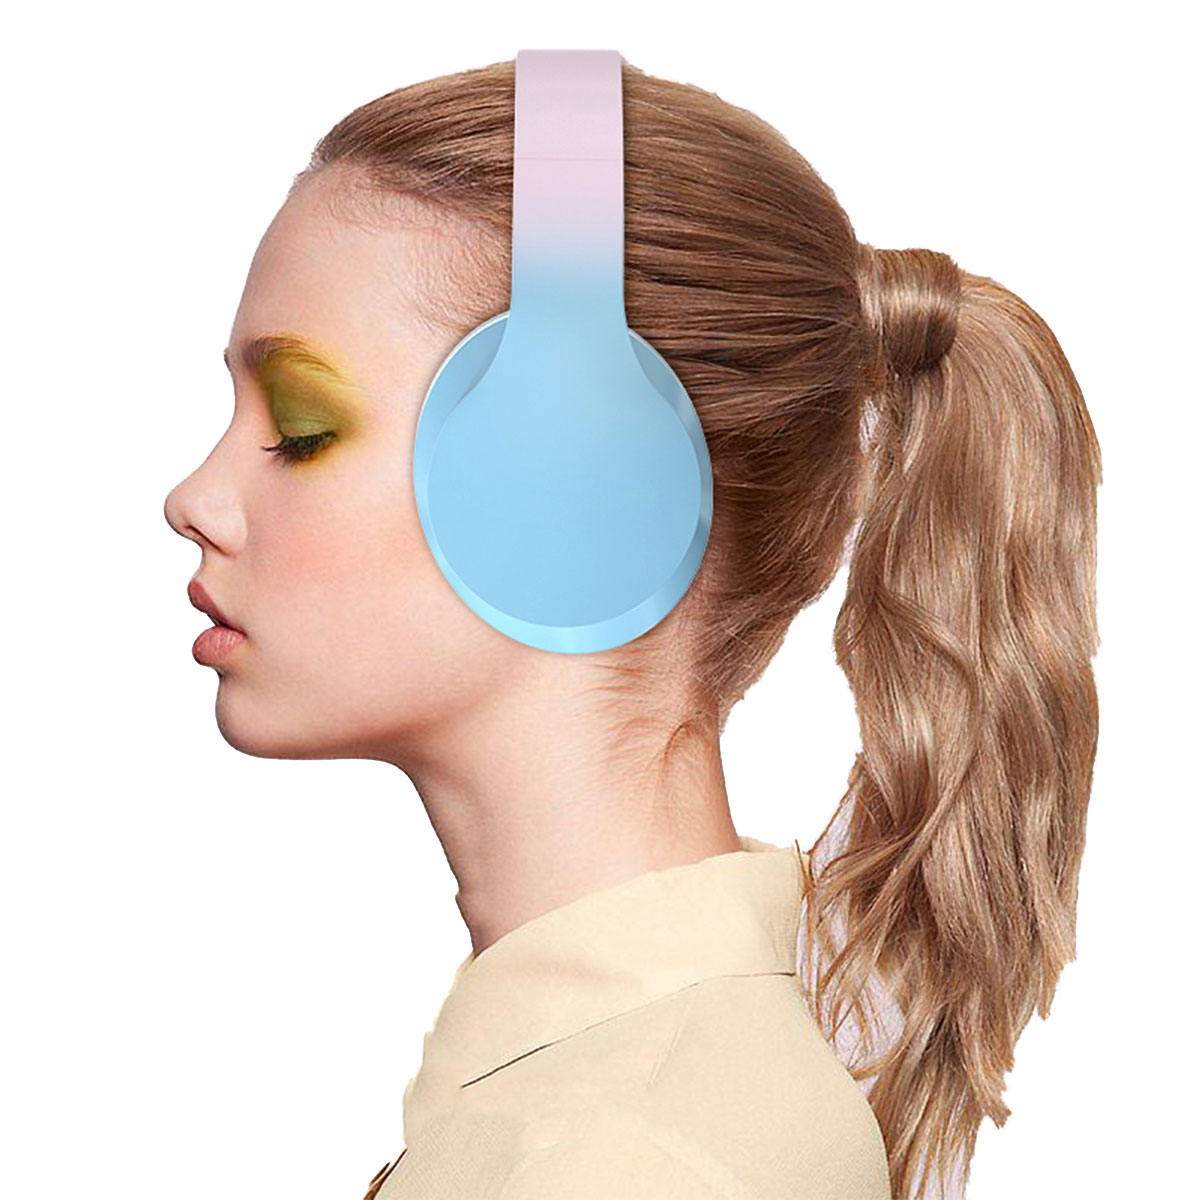 Dunstblau Over-ear Memory-Schaumstoff, Headset Ohrenschützer KINSI Bluetooth Faltbare, Bluetooth aus Over-Ear-Kopfhörer,